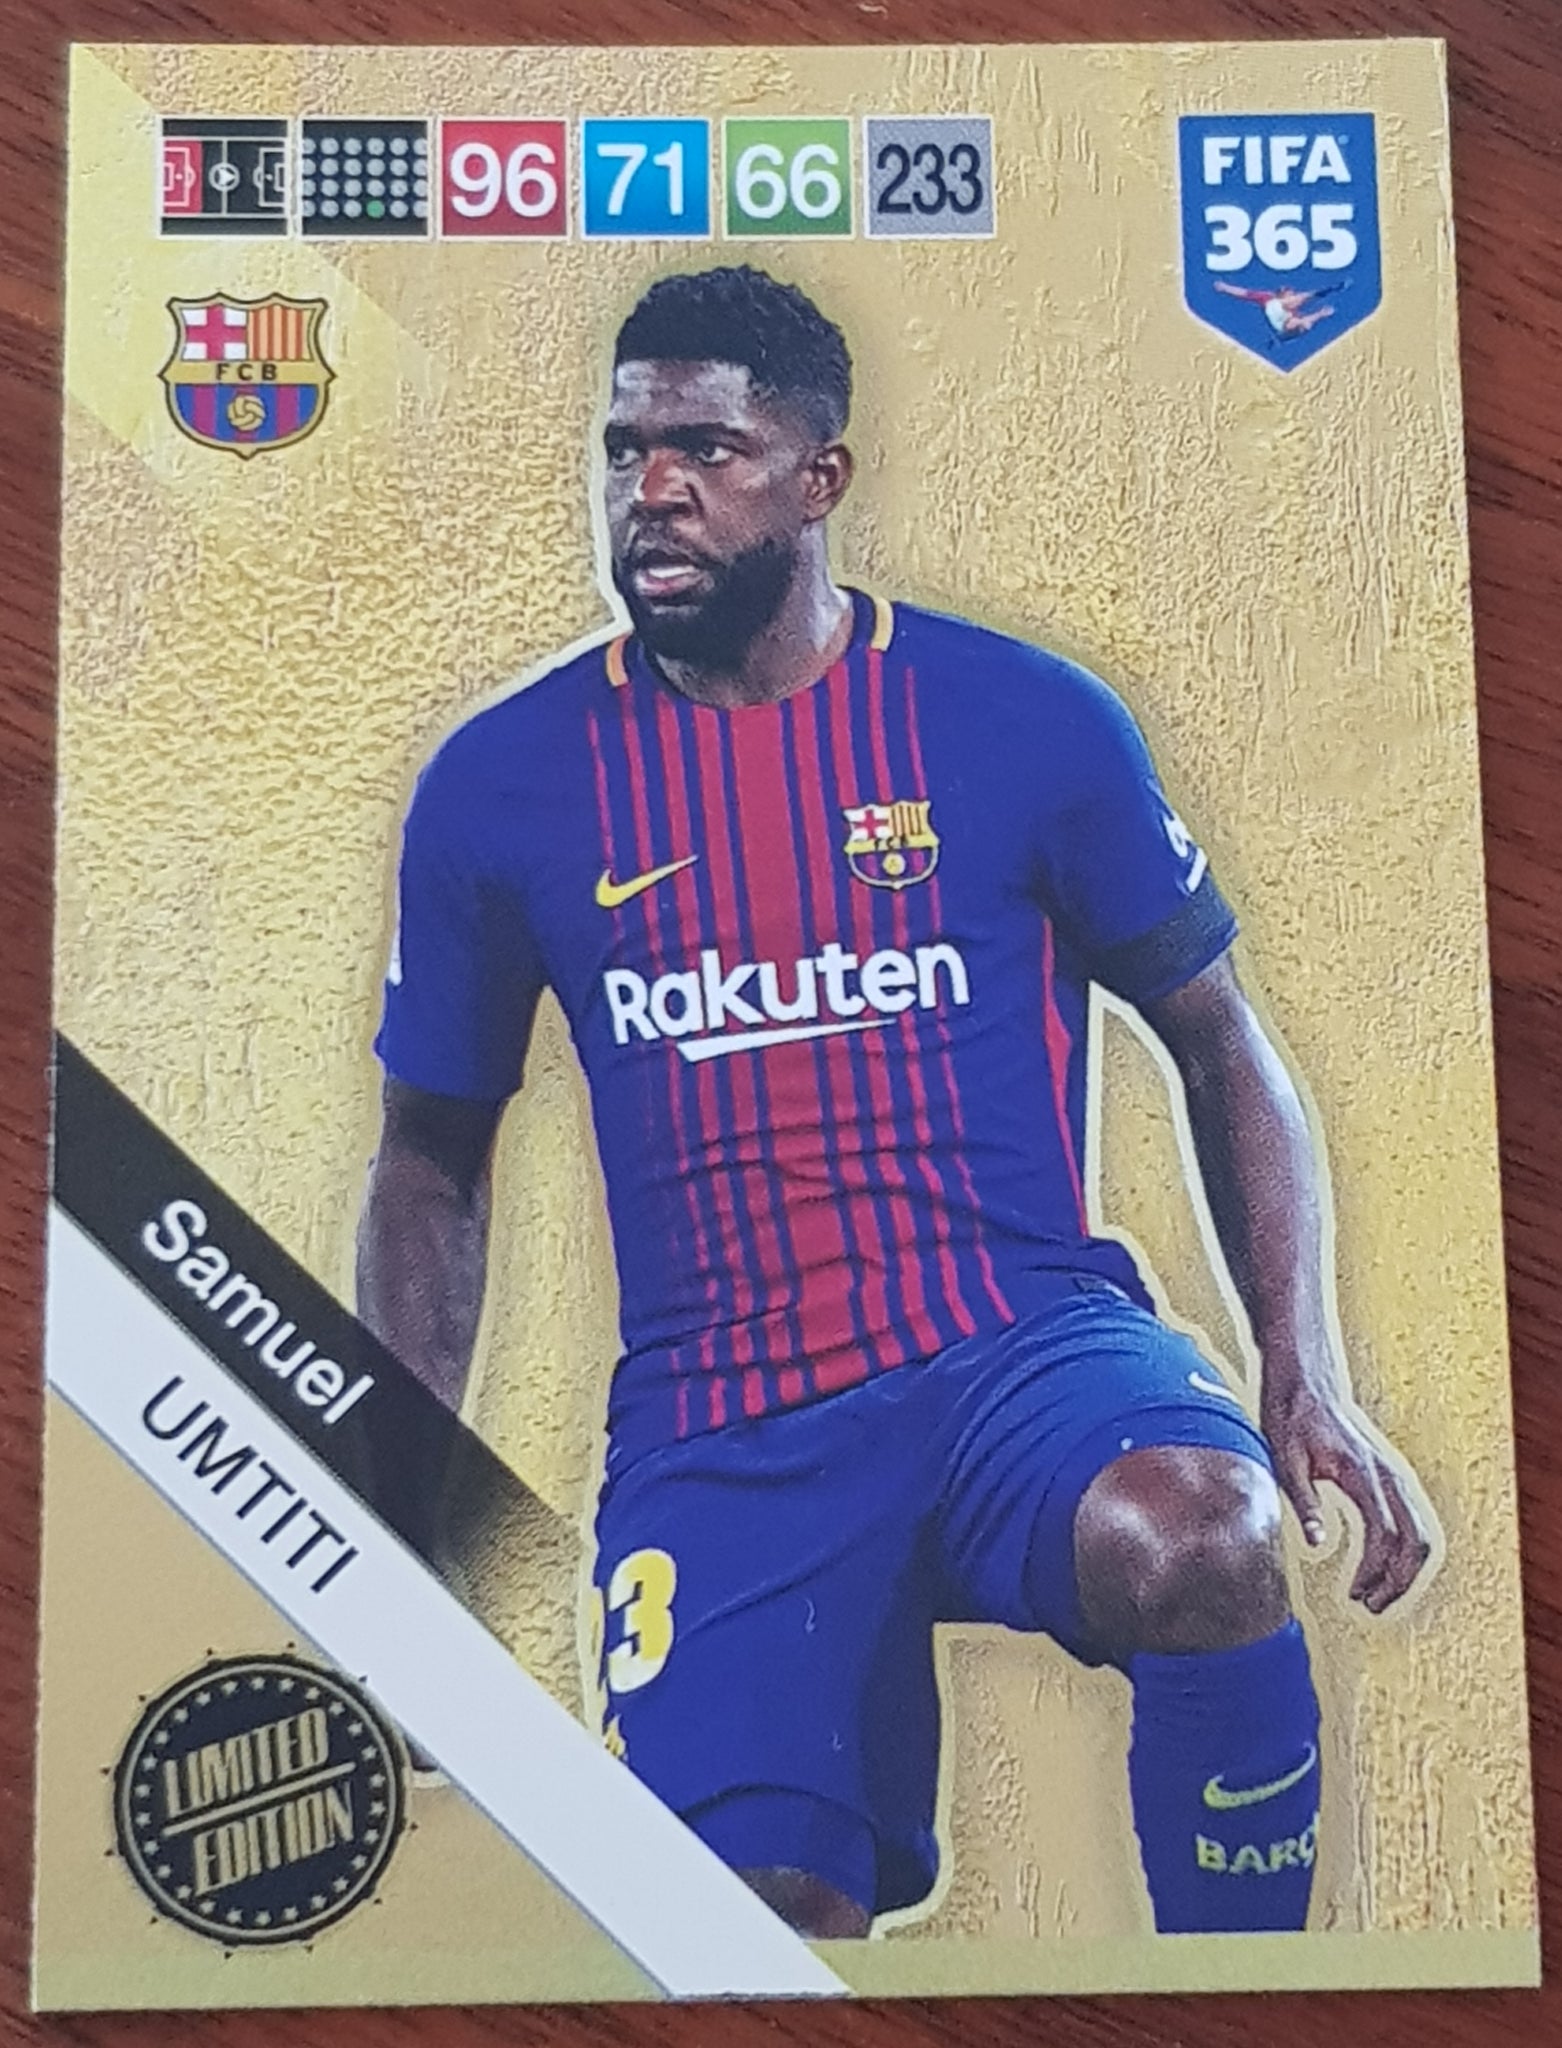 2018 Panini Adrenalyn FIFA 365 Samuel Umtiti Limited Edition Trading Card